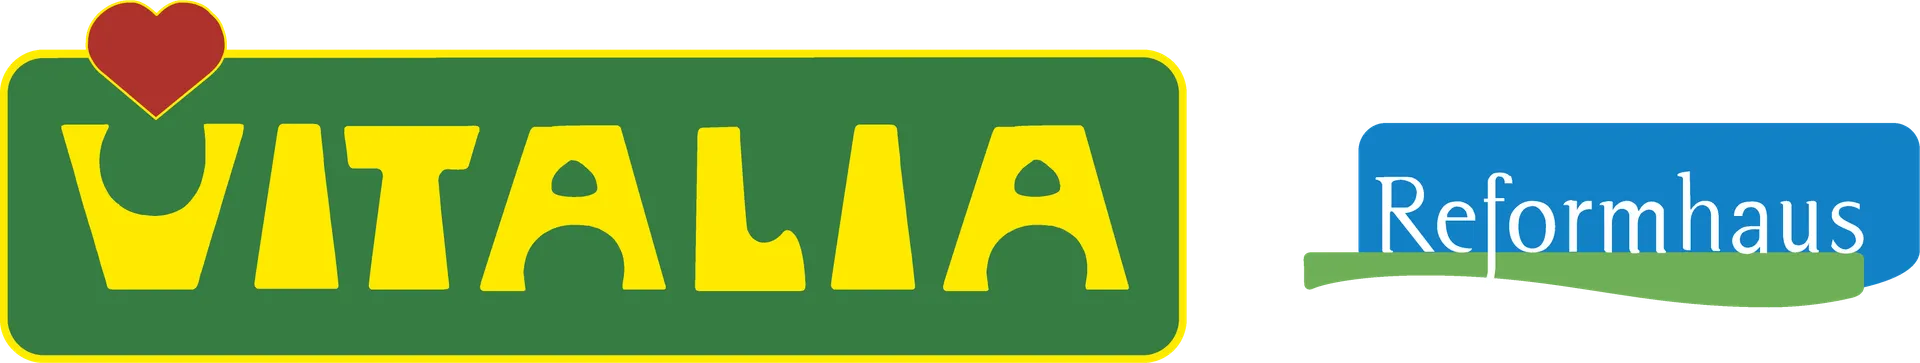 VITALIA logo